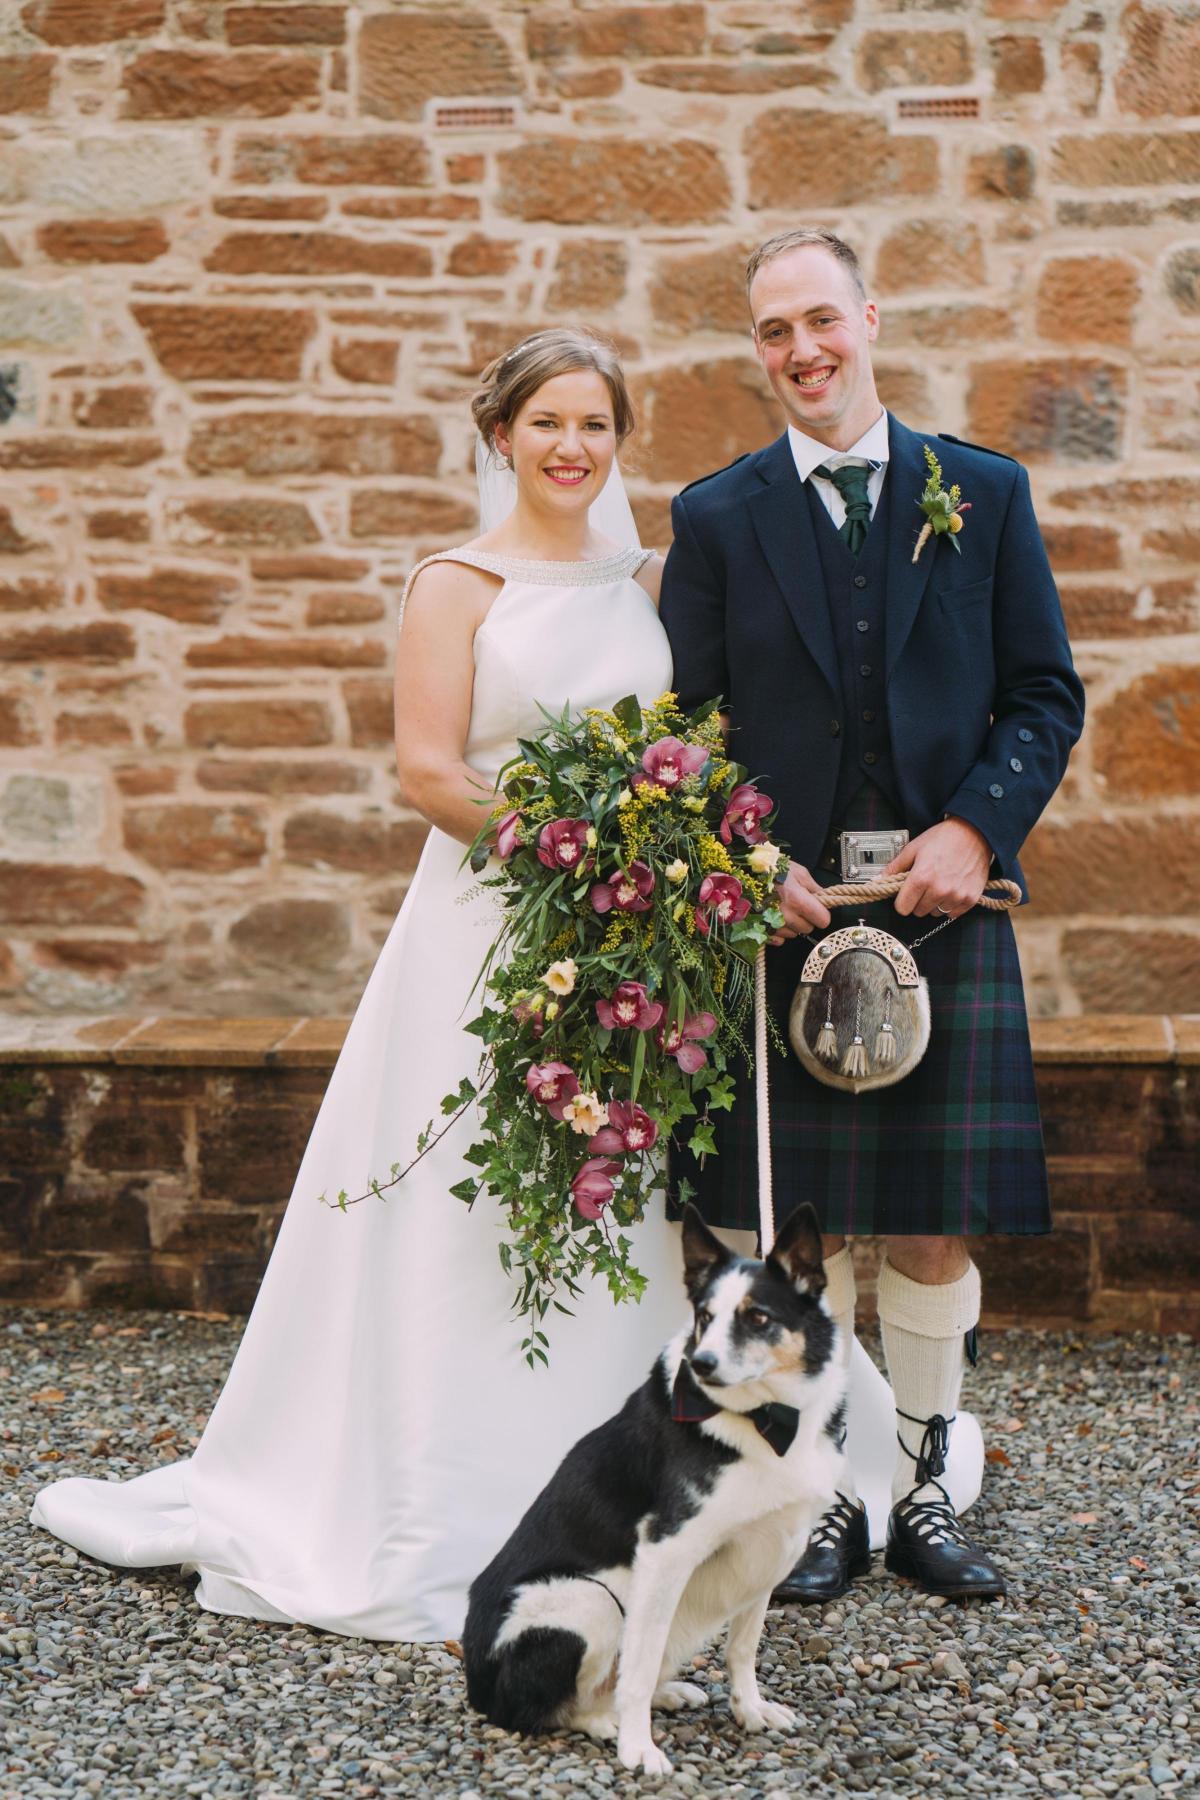 Ross Baird, of Dalhowan Farm, Crosshill, married Lauren Kennedy, of Bogside Farm, Coylton, in September, 2021 Photo: Eilidh Robertson Photography